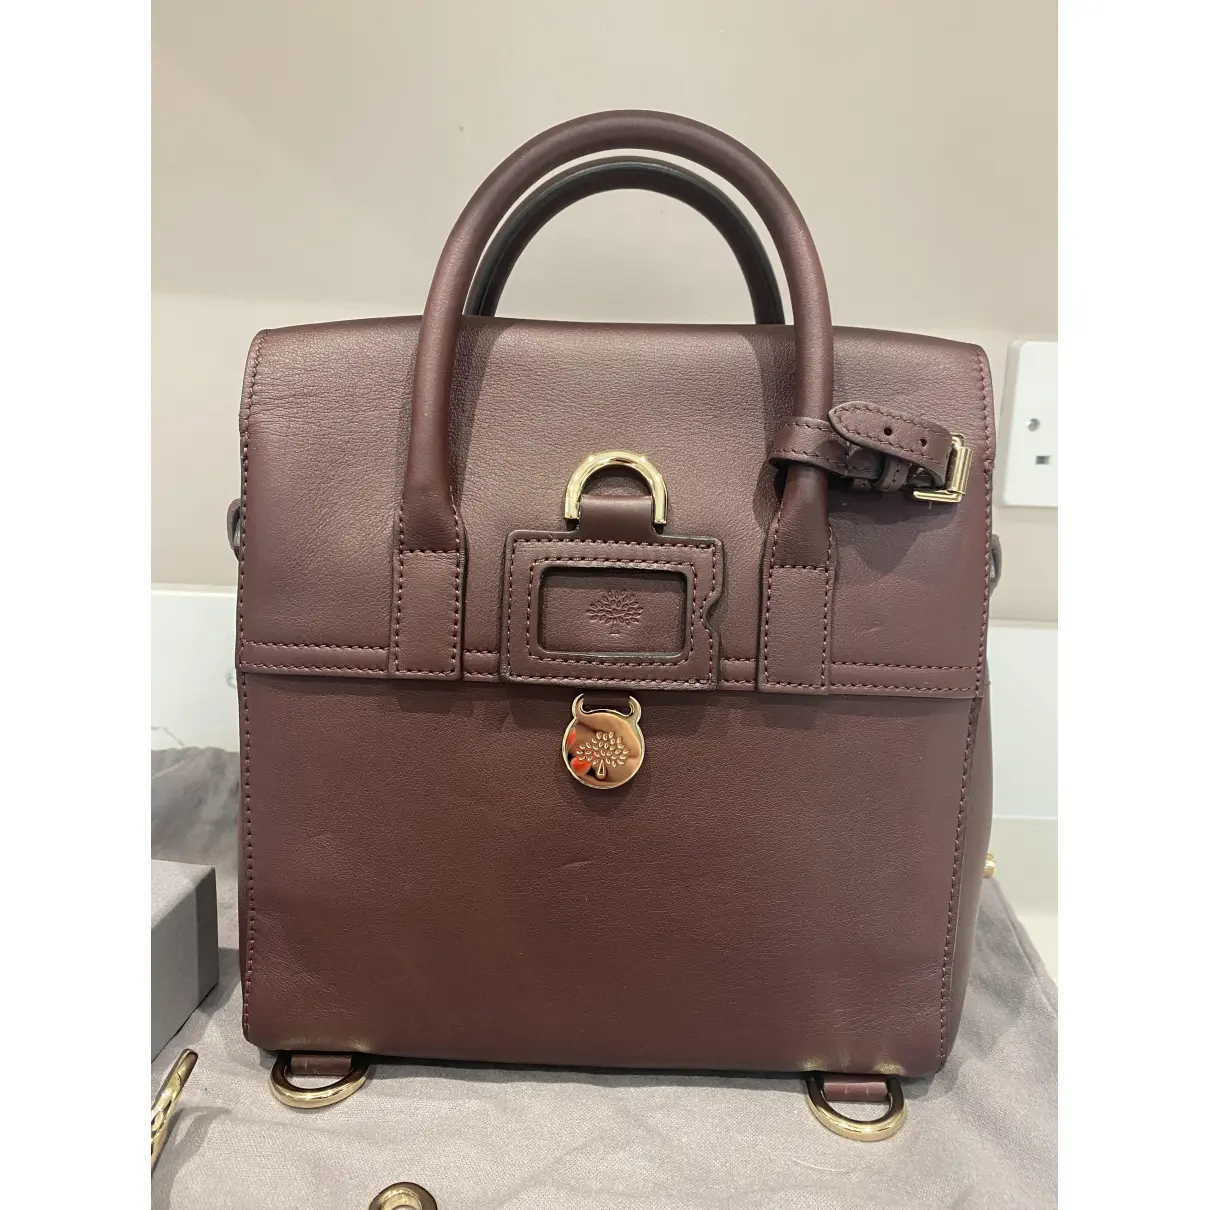 Buy Mulberry Cara Delevigne leather bag online